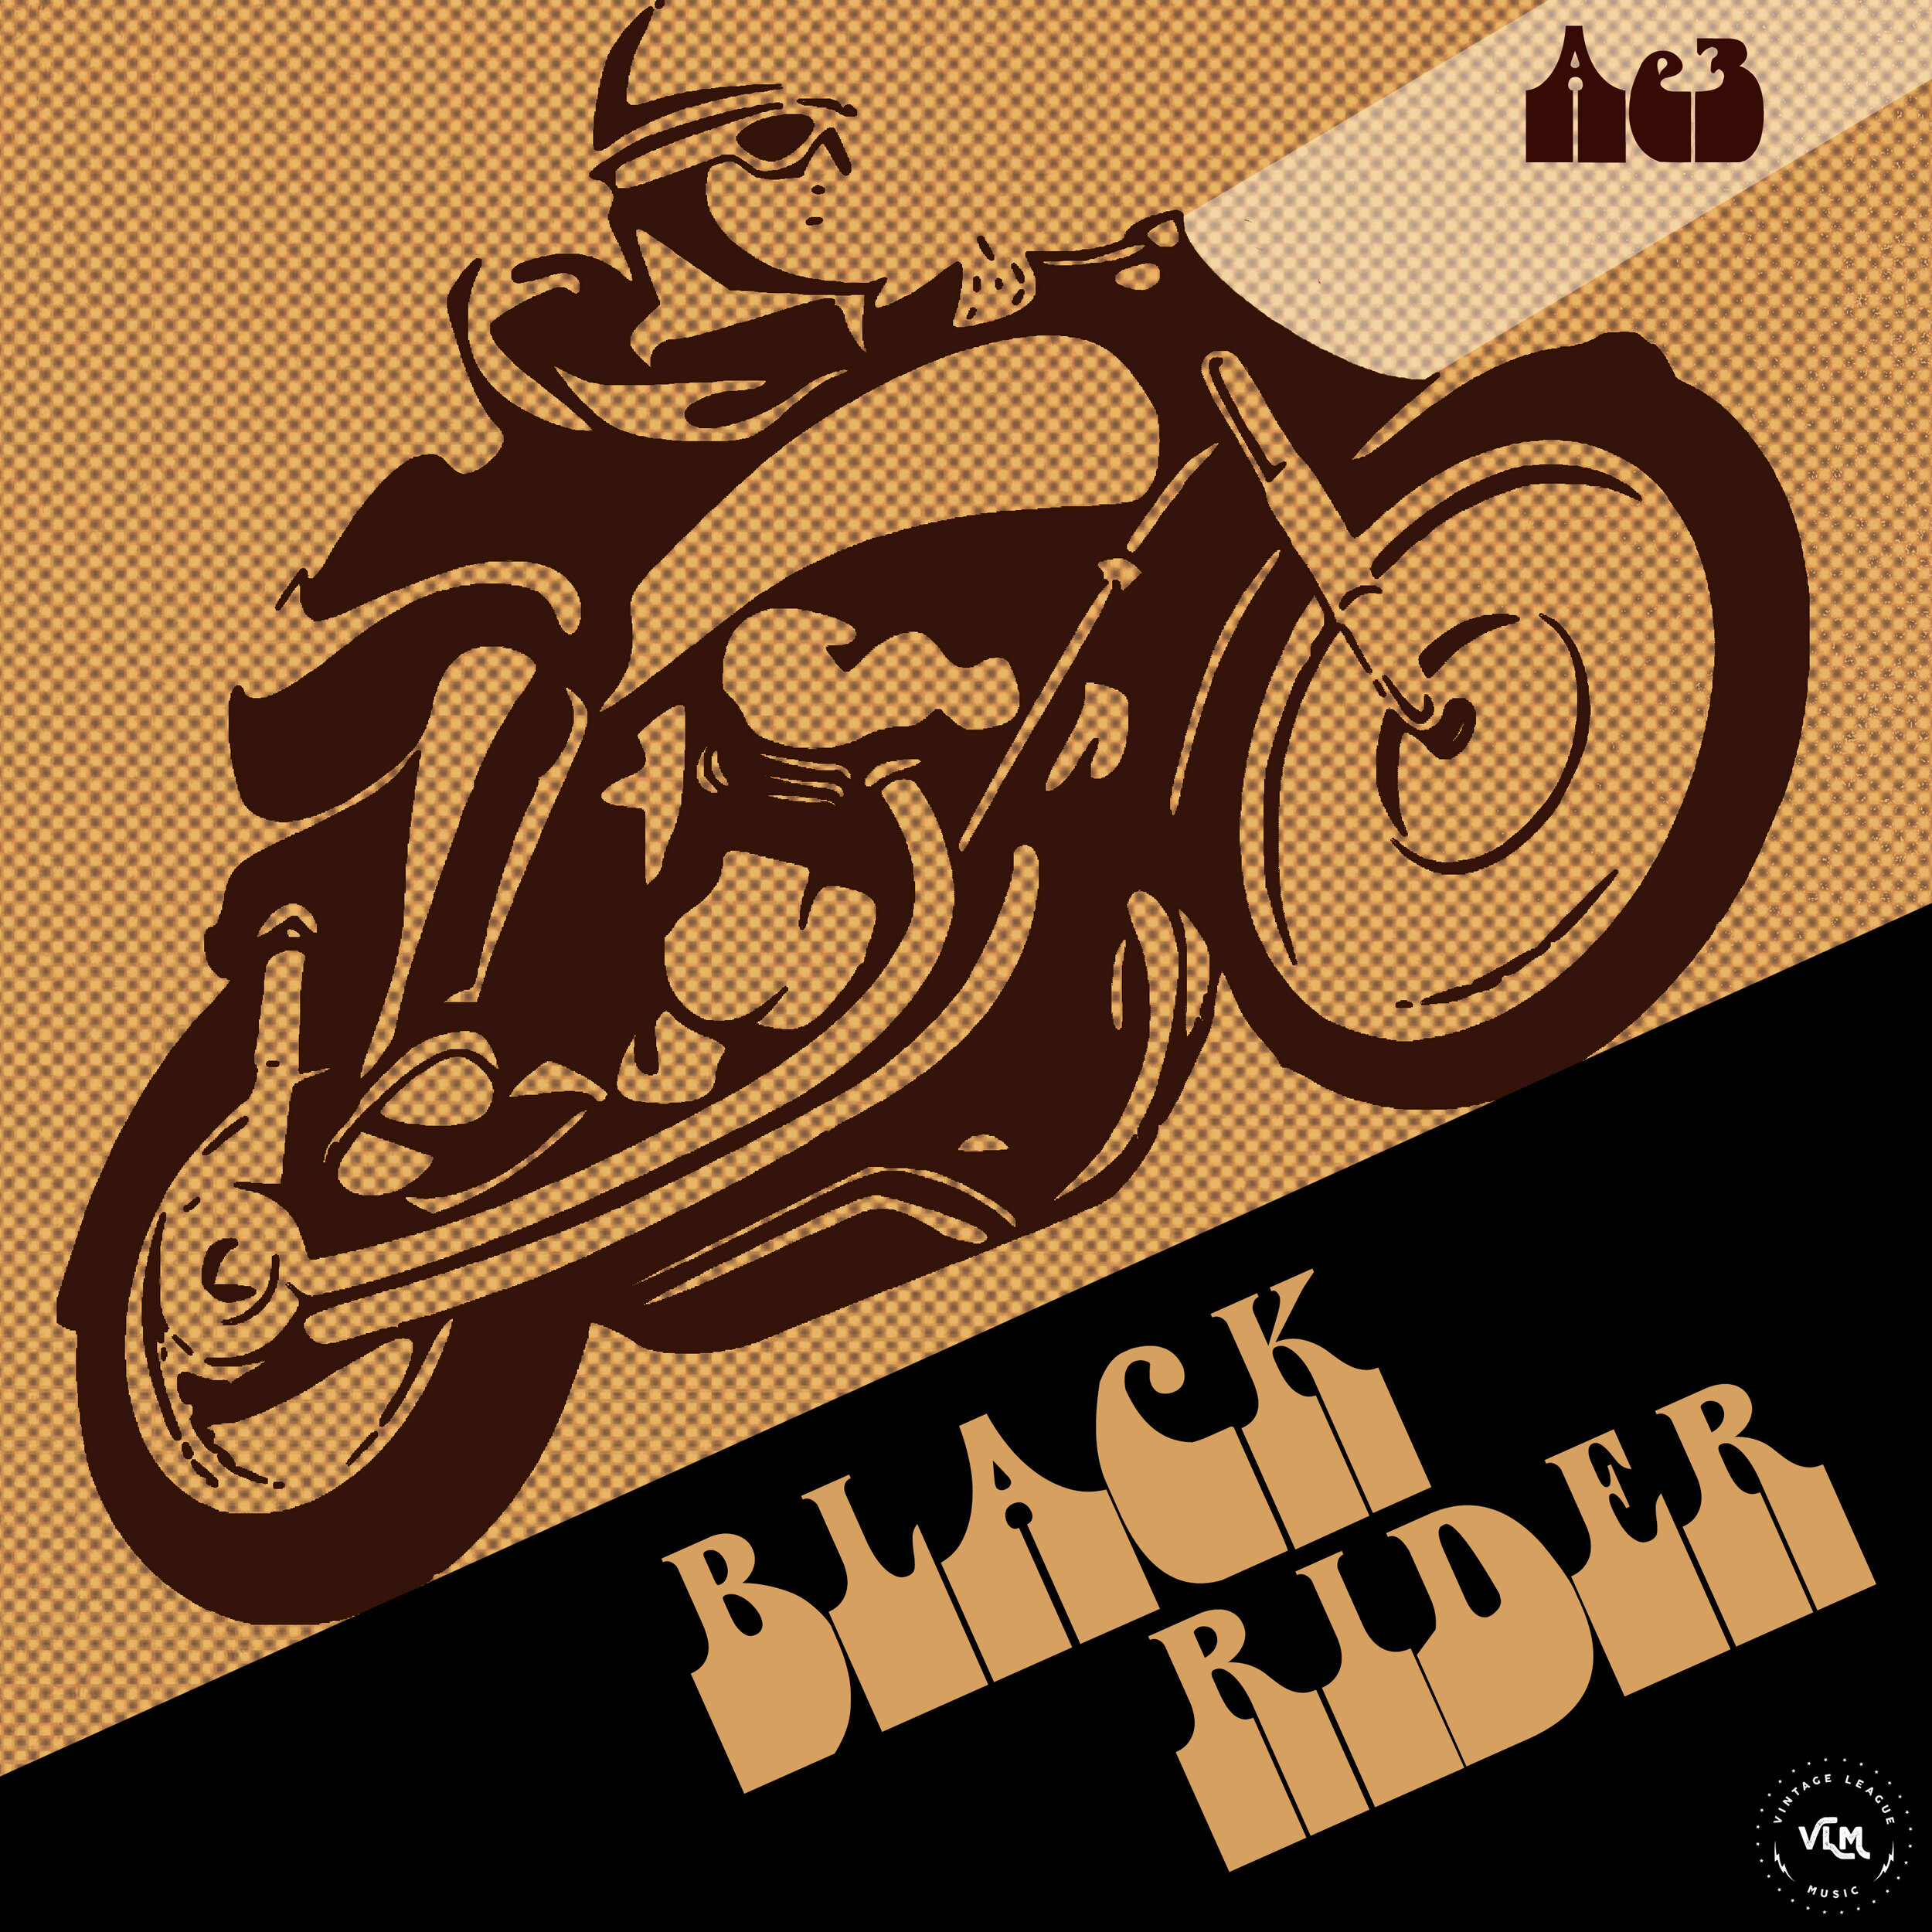 Black Rider single final.jpg